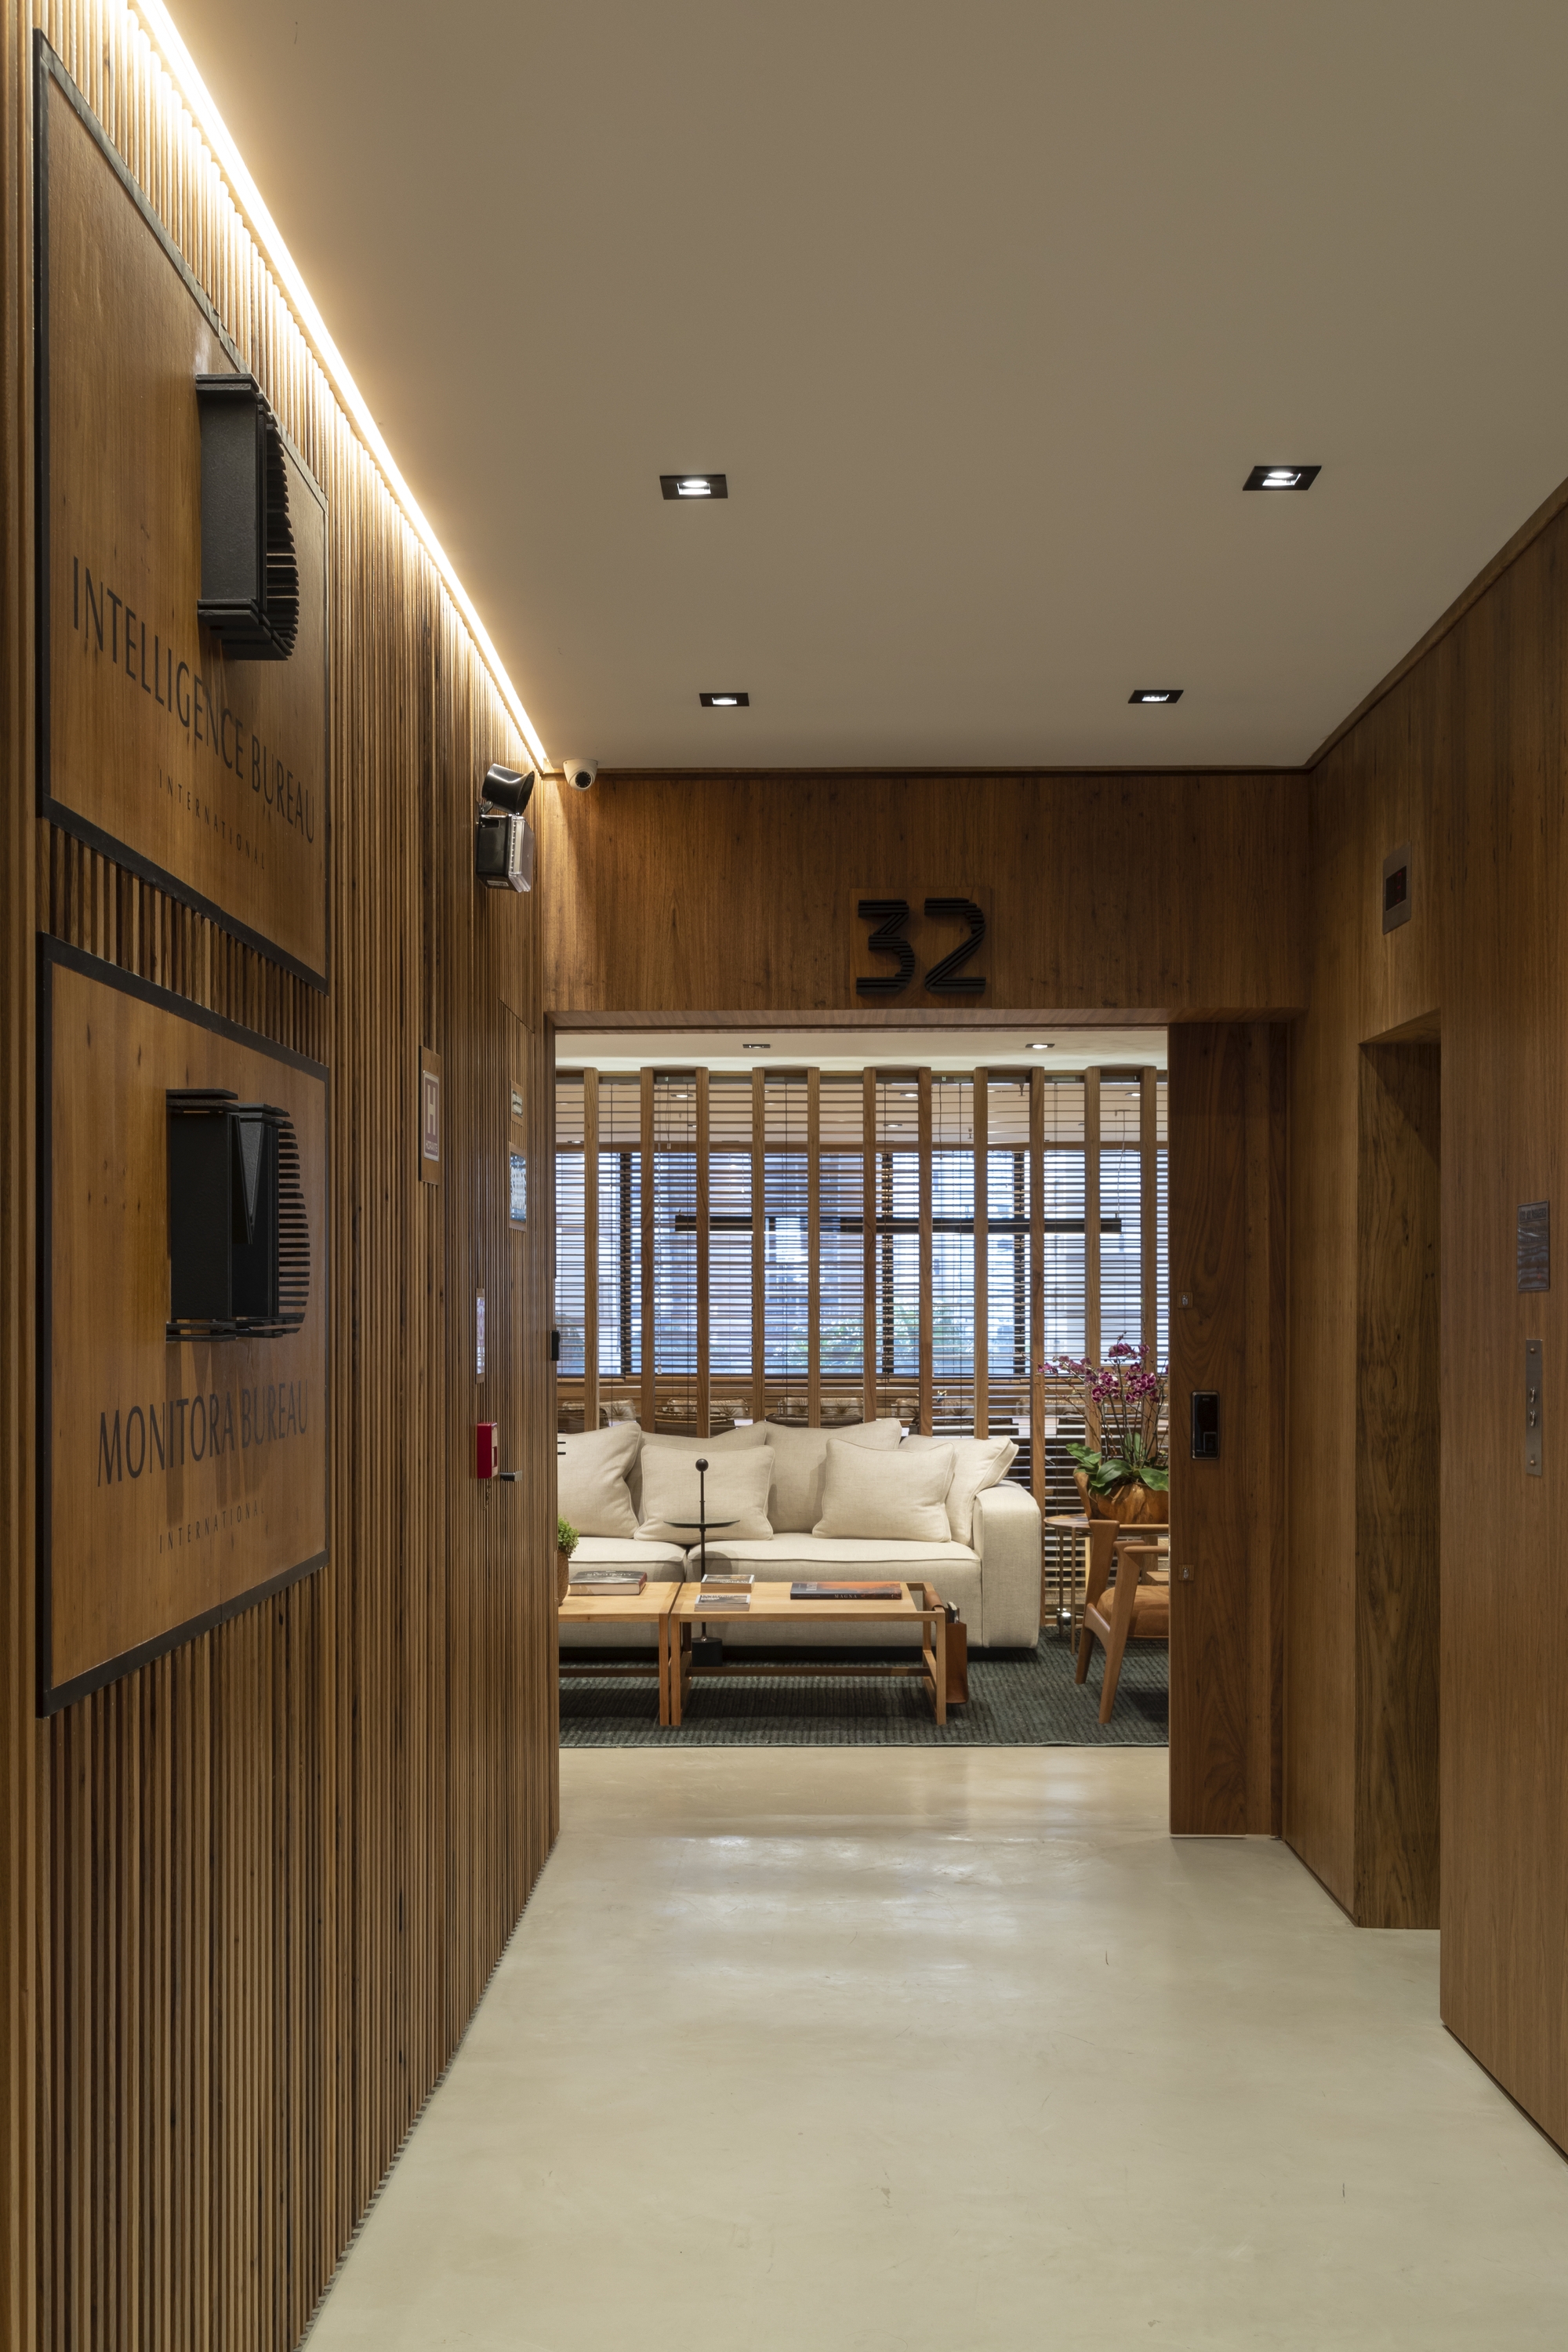 NIB办公室——圣保罗|ART-Arrakis | 建筑室内设计的创新与灵感